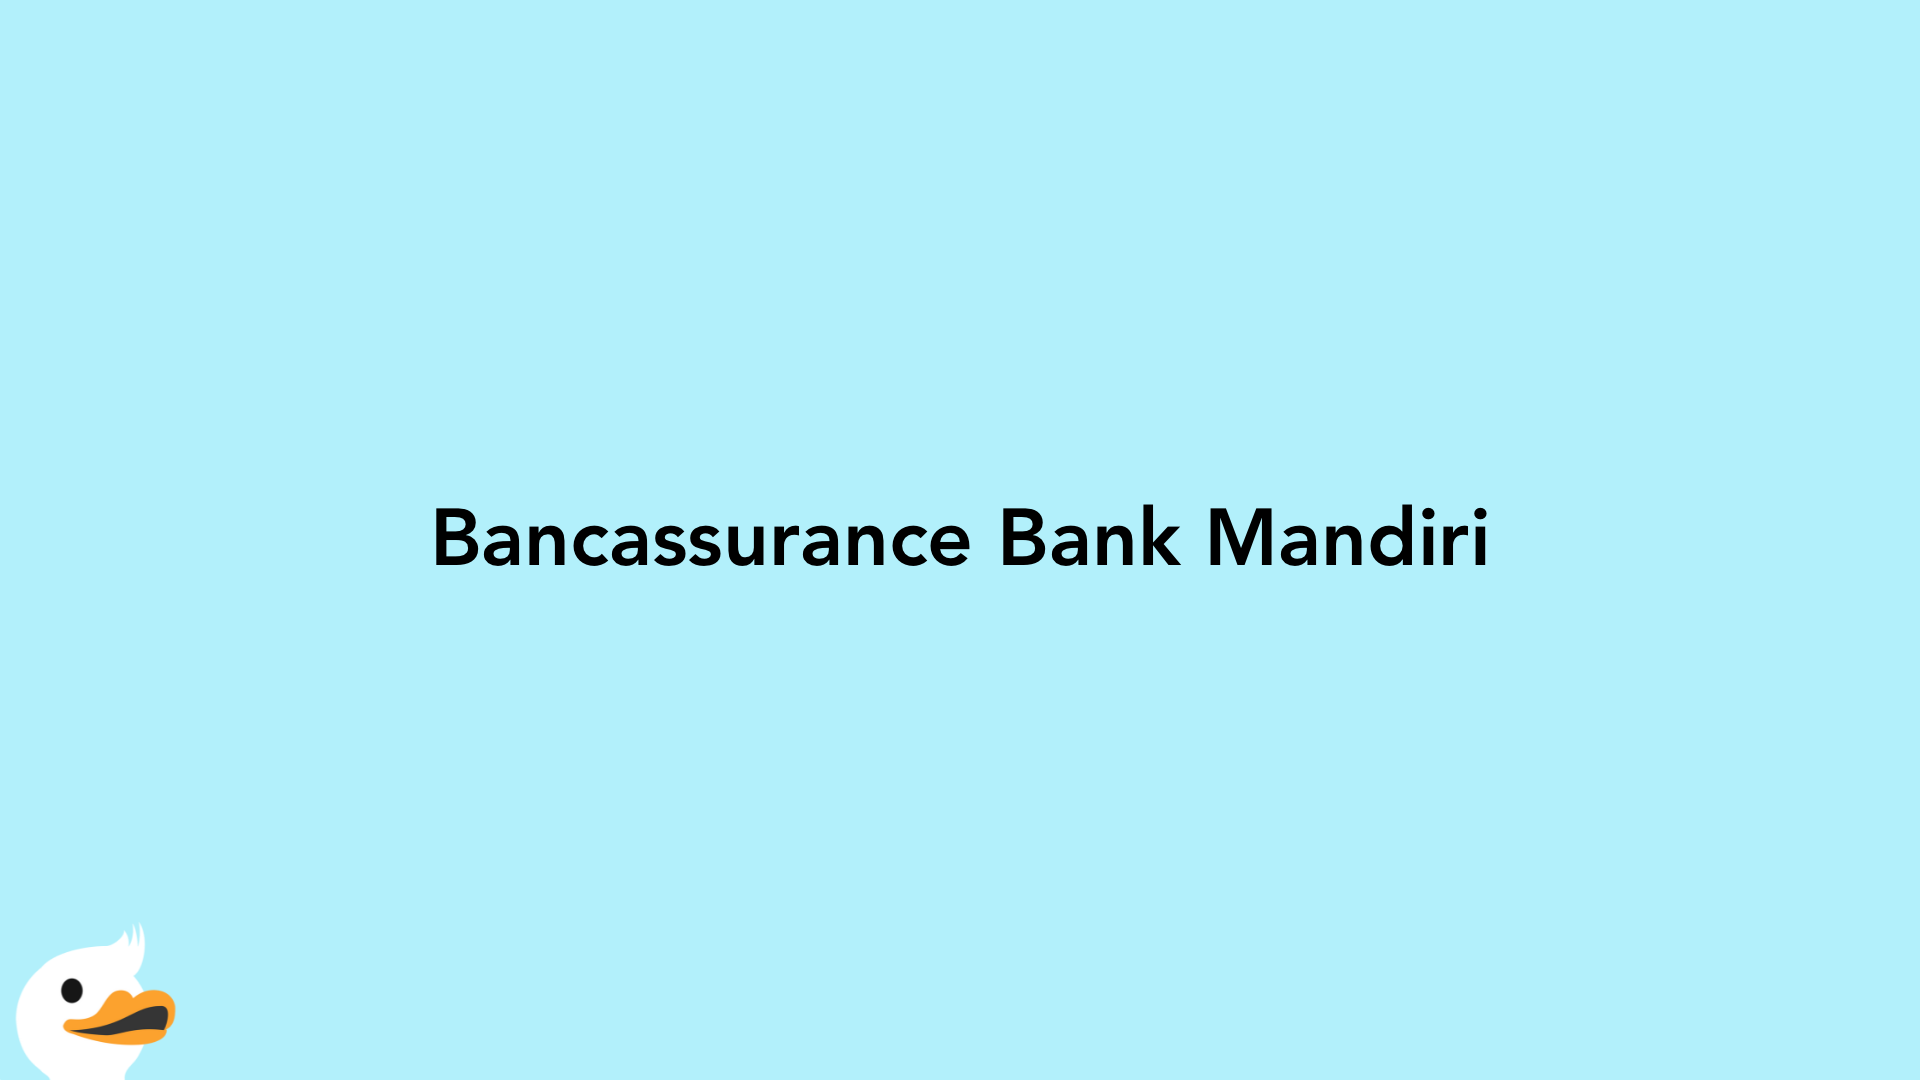 Bancassurance Bank Mandiri